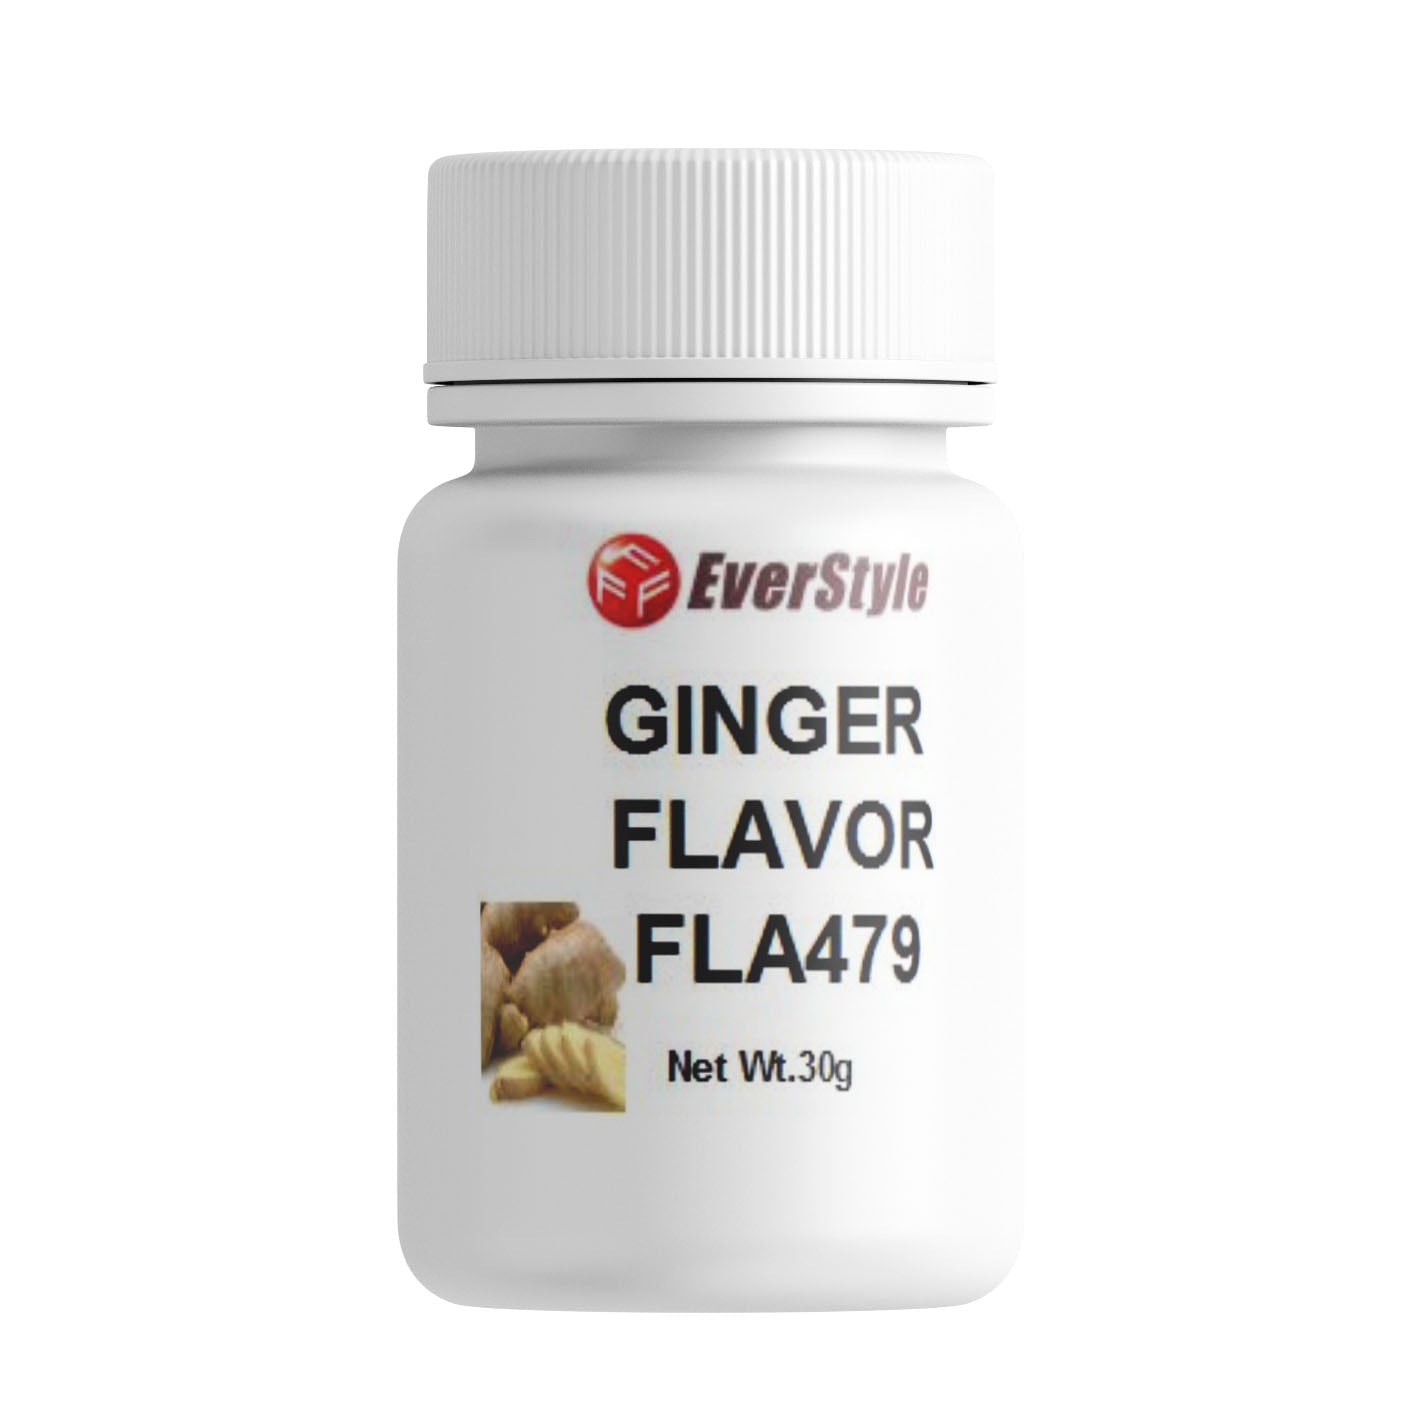 Everstyle Ginger Flavor 30g (FLA479)